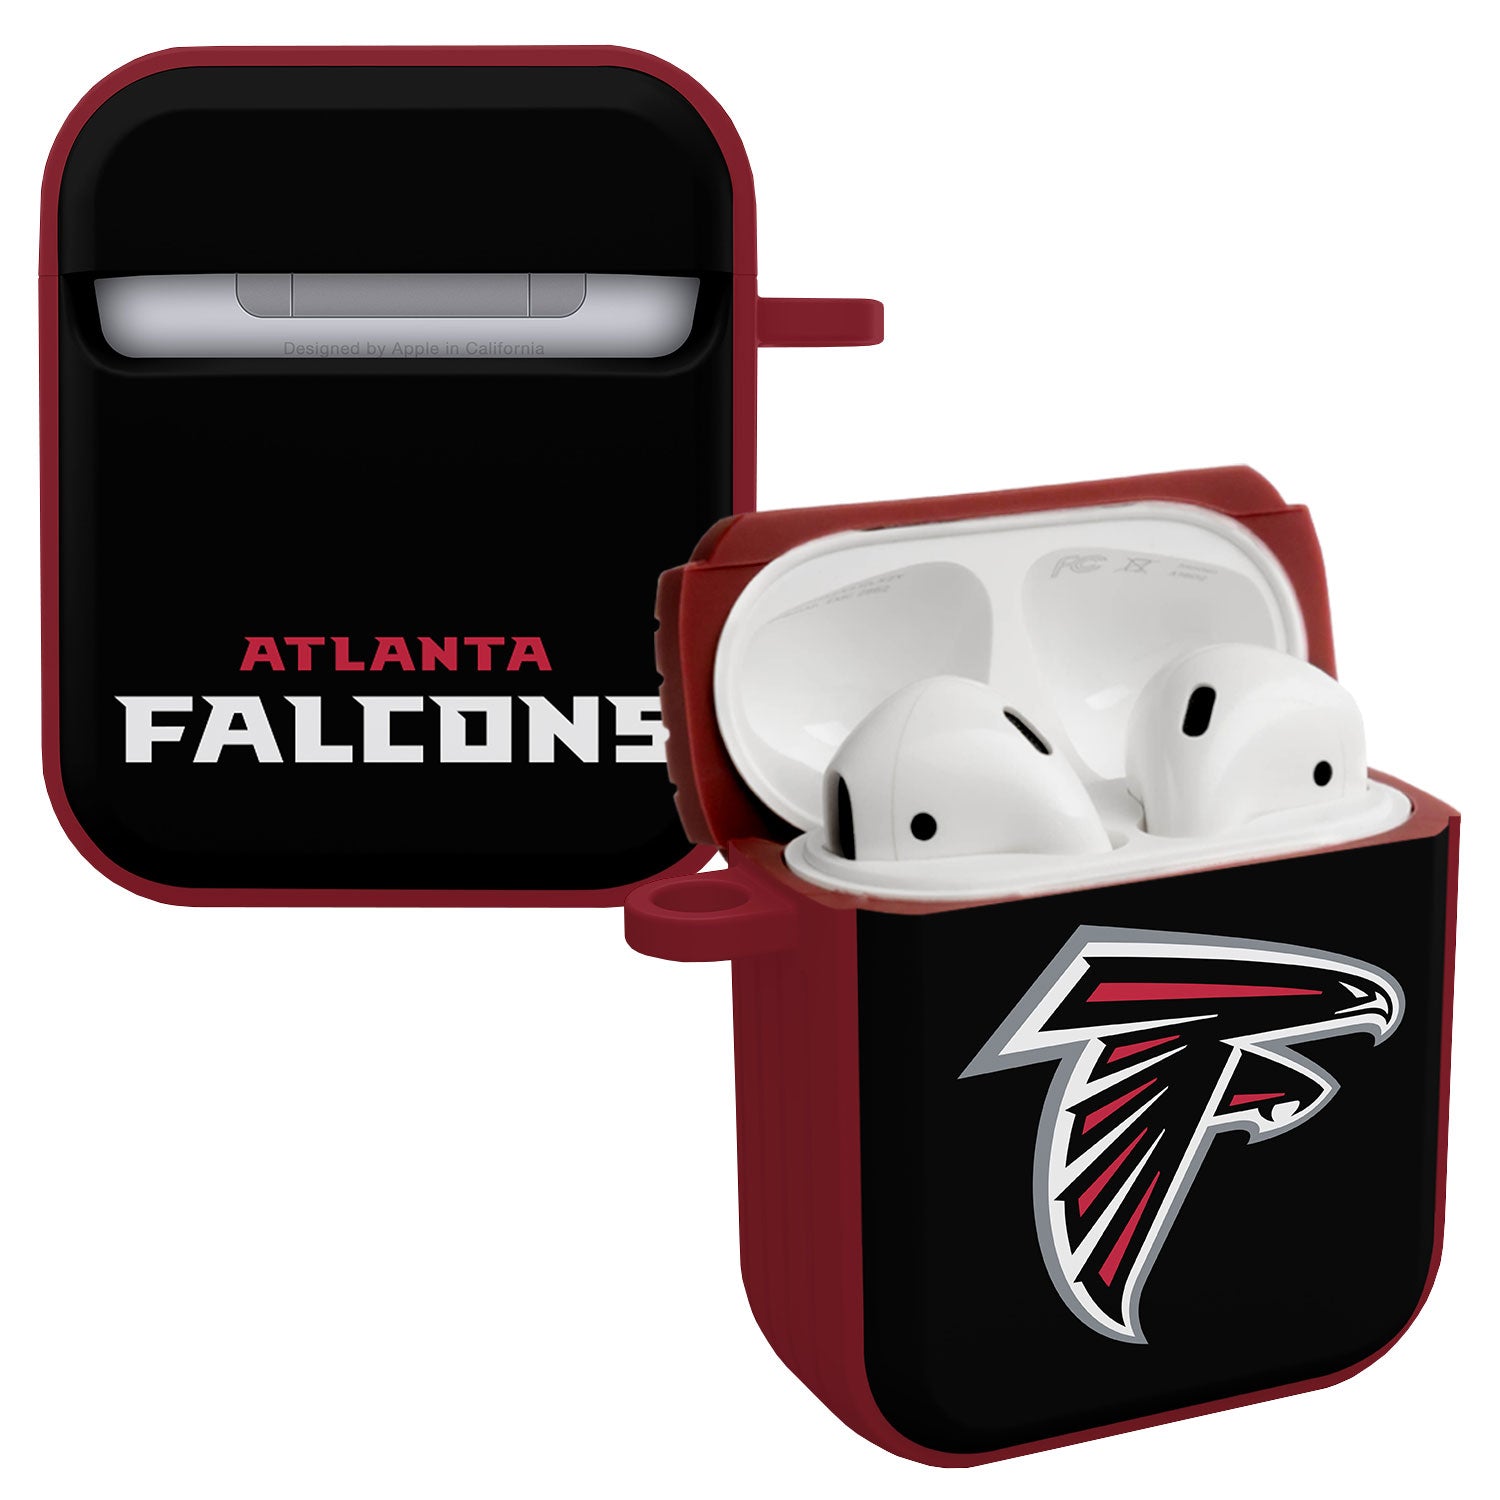 Atlanta Falcons HDX Apple AirPods Gen 1 & 2 Case Cover